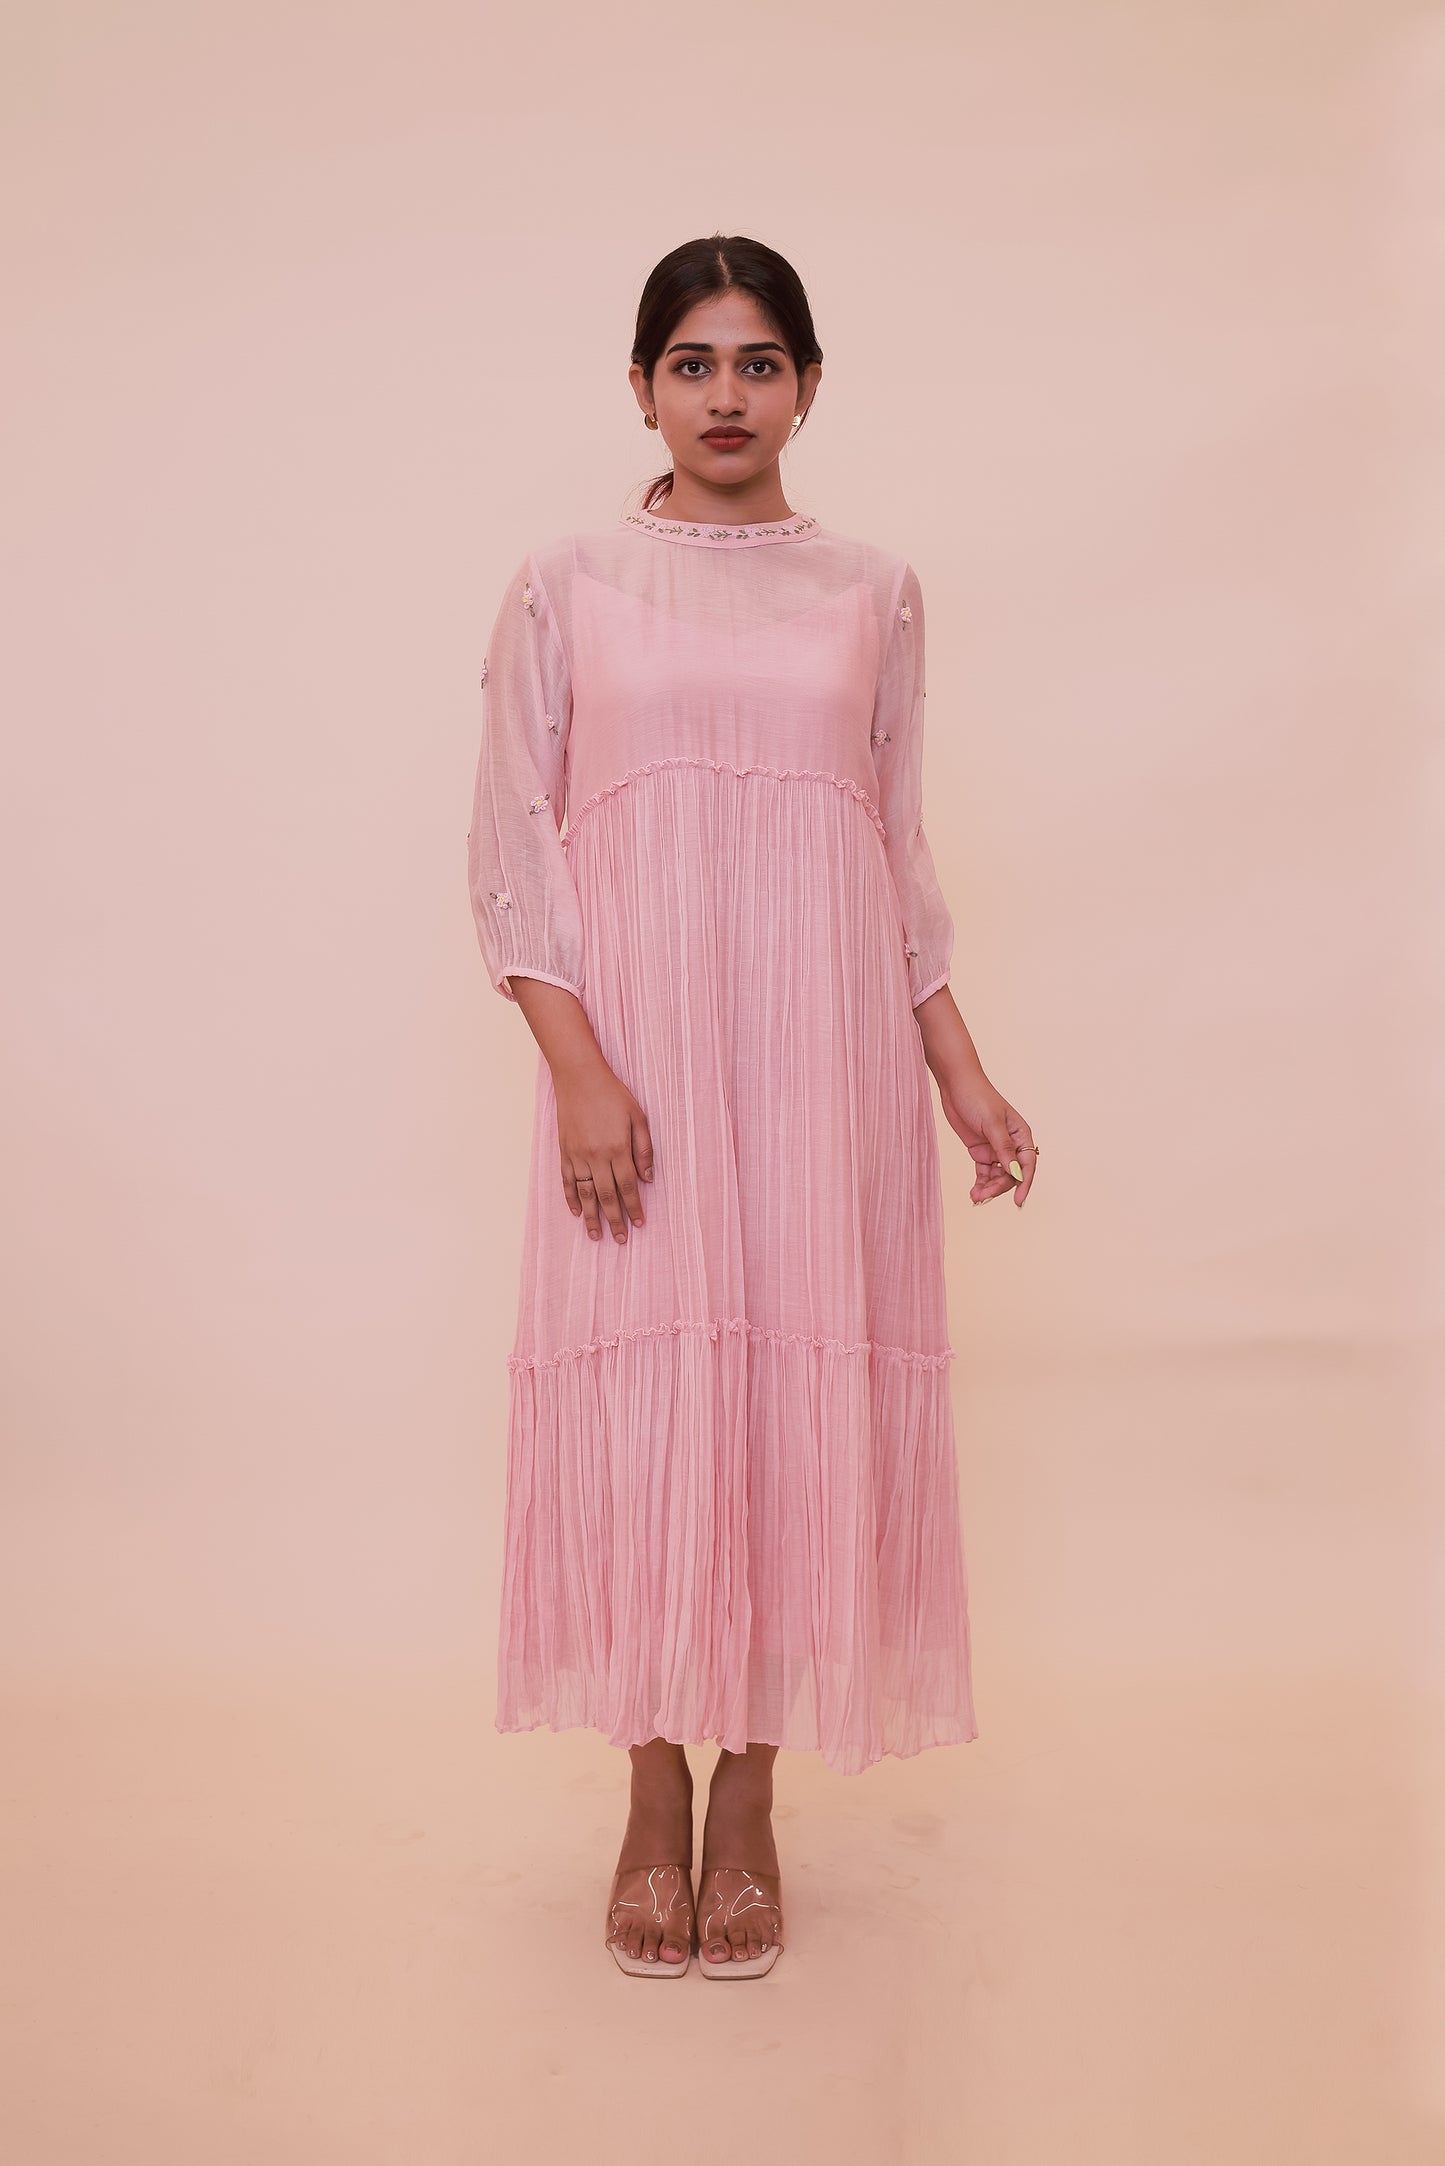 Pastel pink tier dress